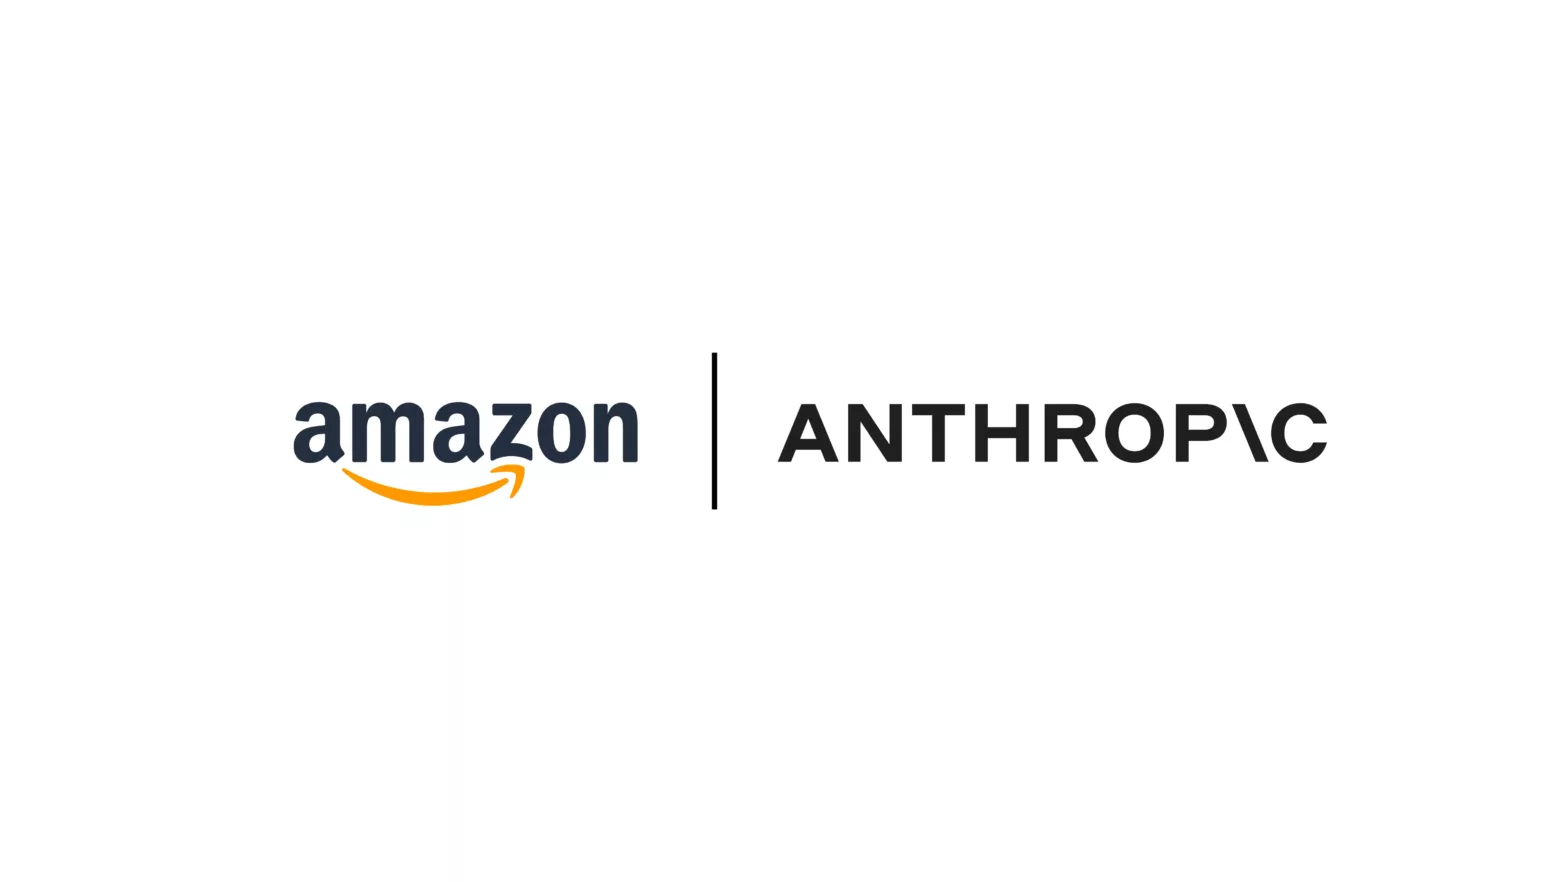 amazon invests in anthropic